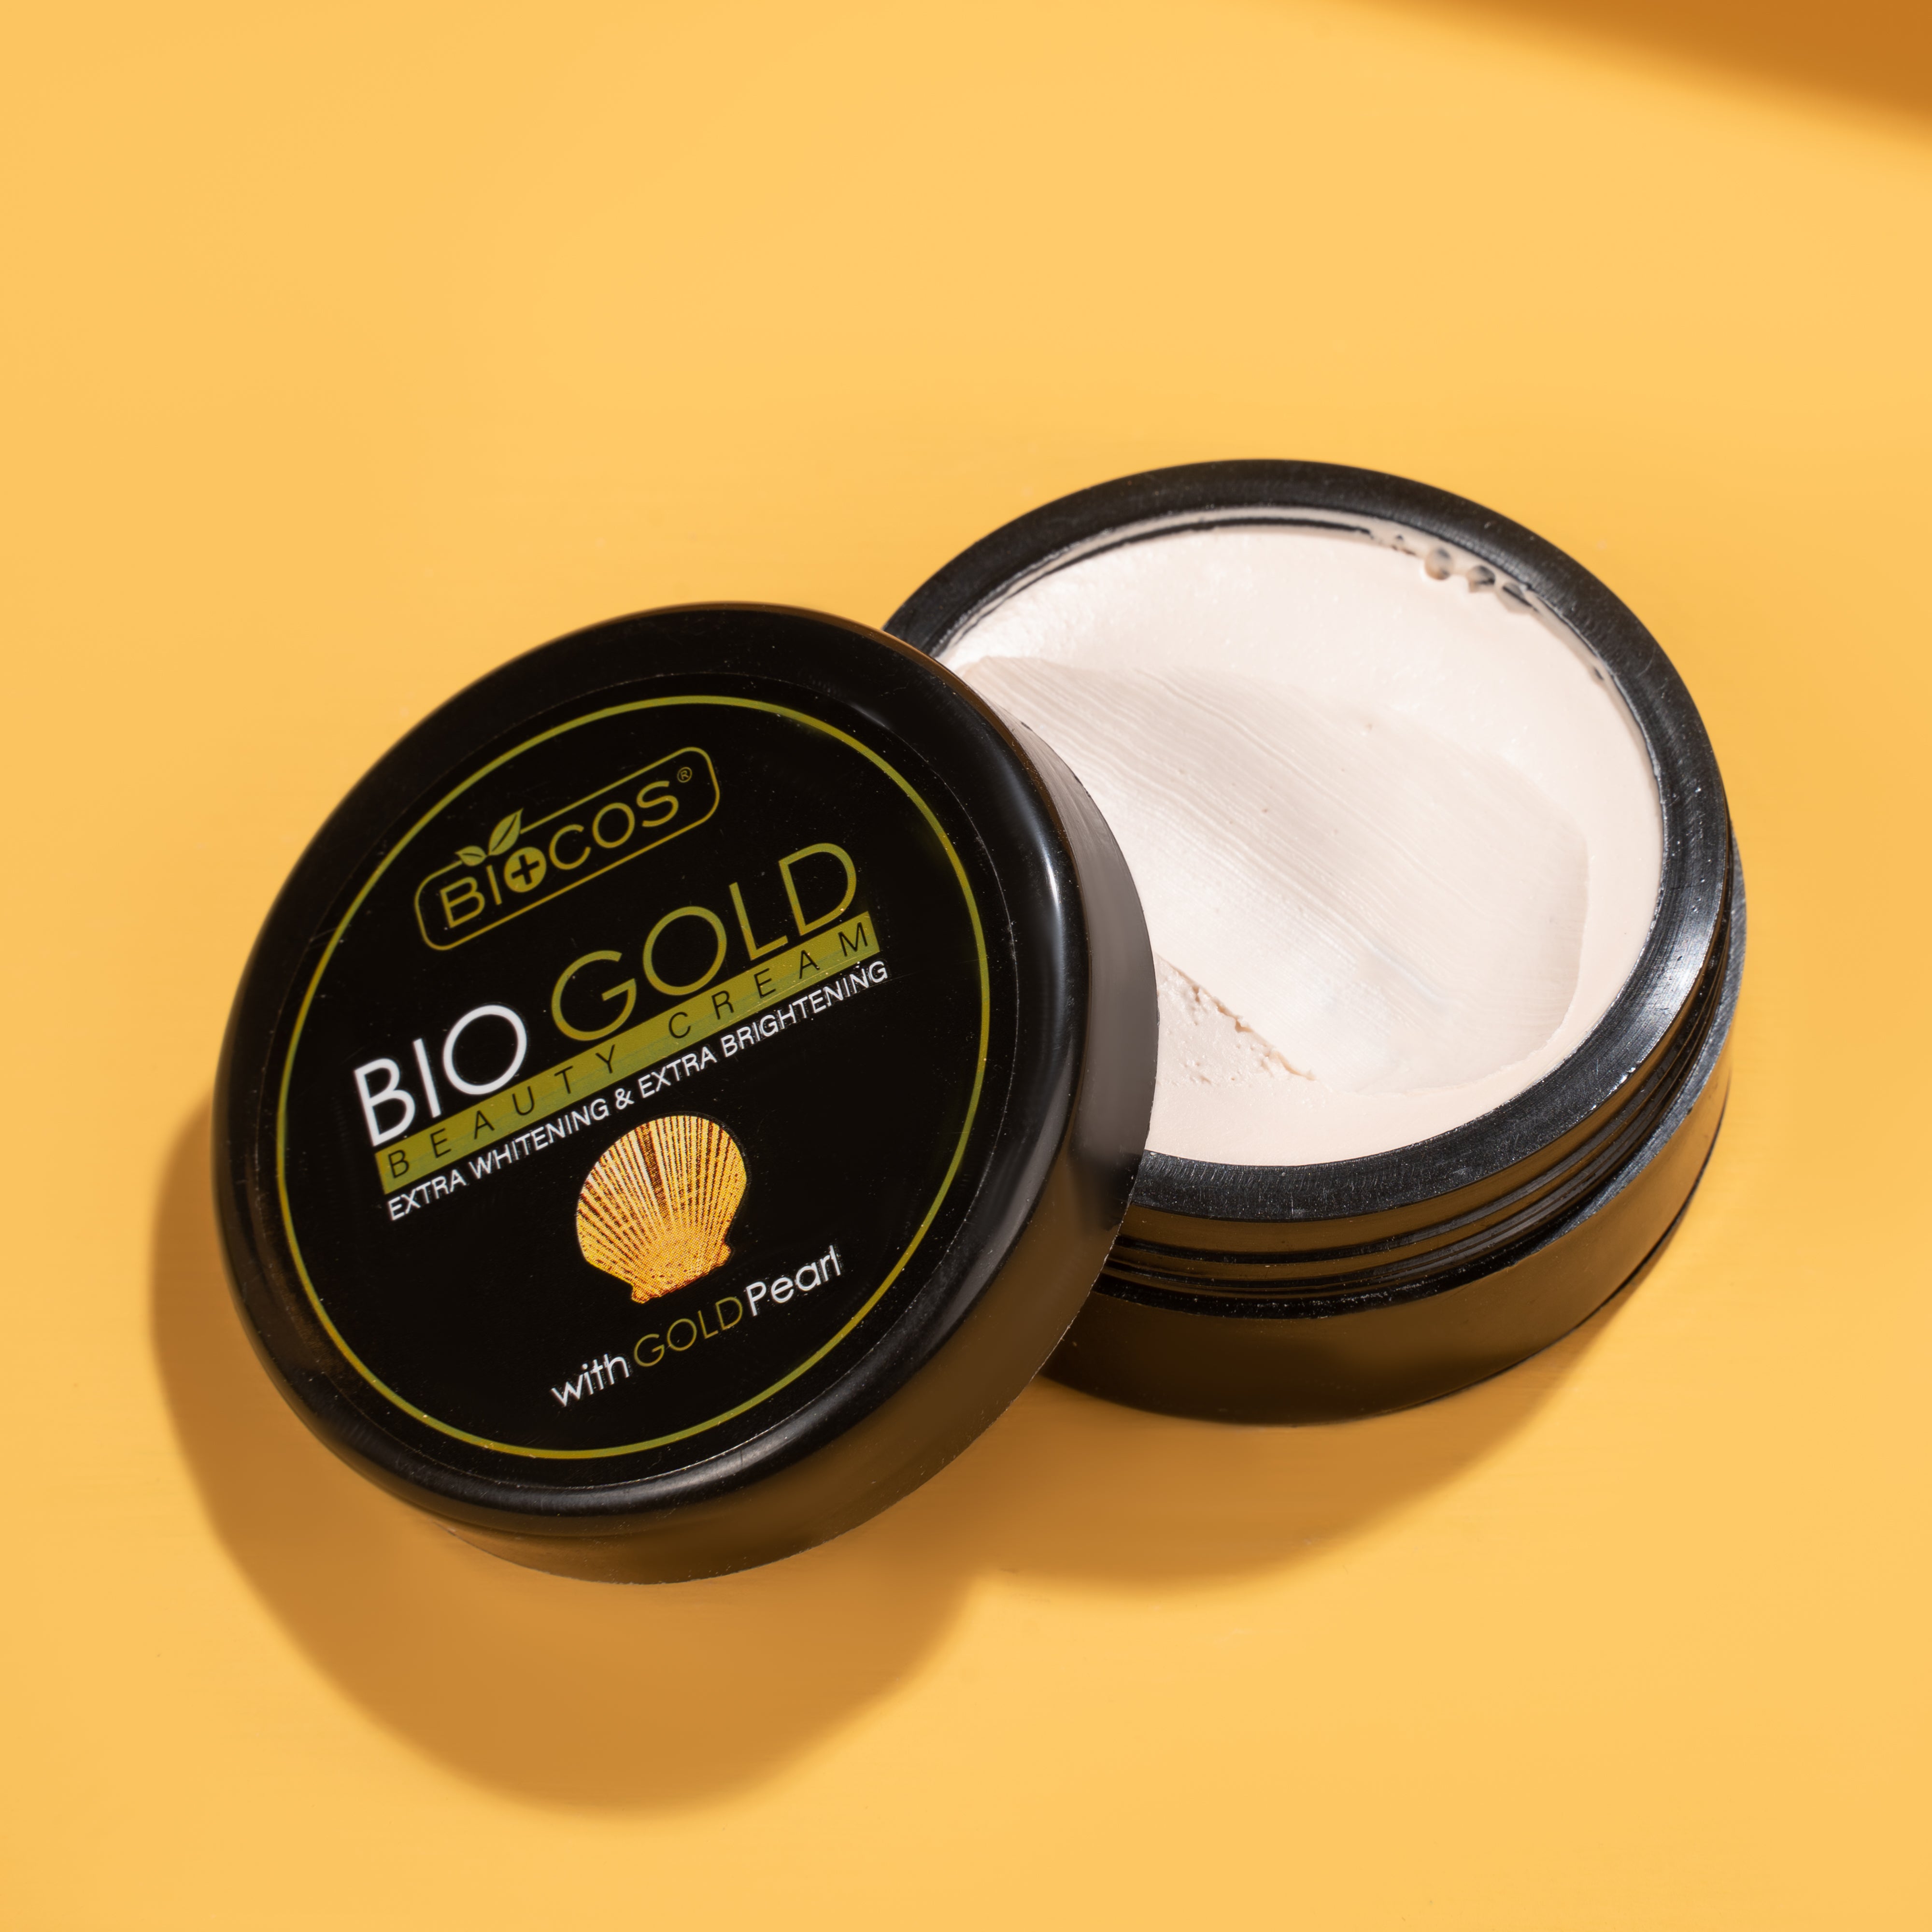 BioGold Beauty Cream